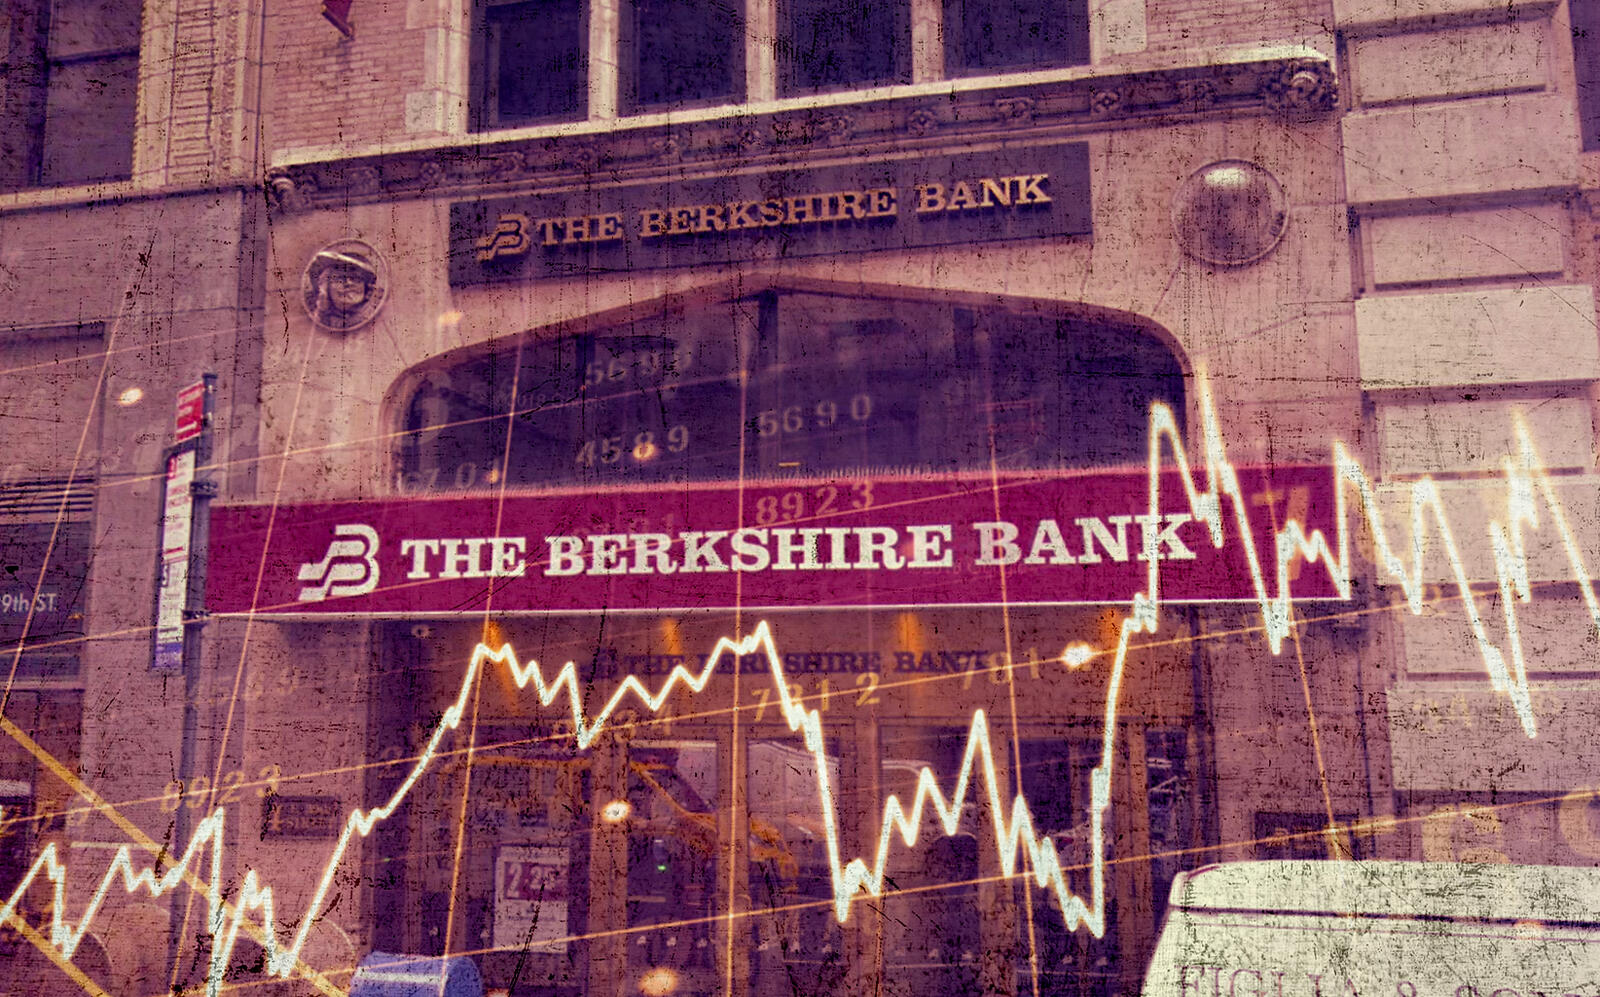 Berkshire Bank headquarters in 4 East 39th Street (Google Maps)